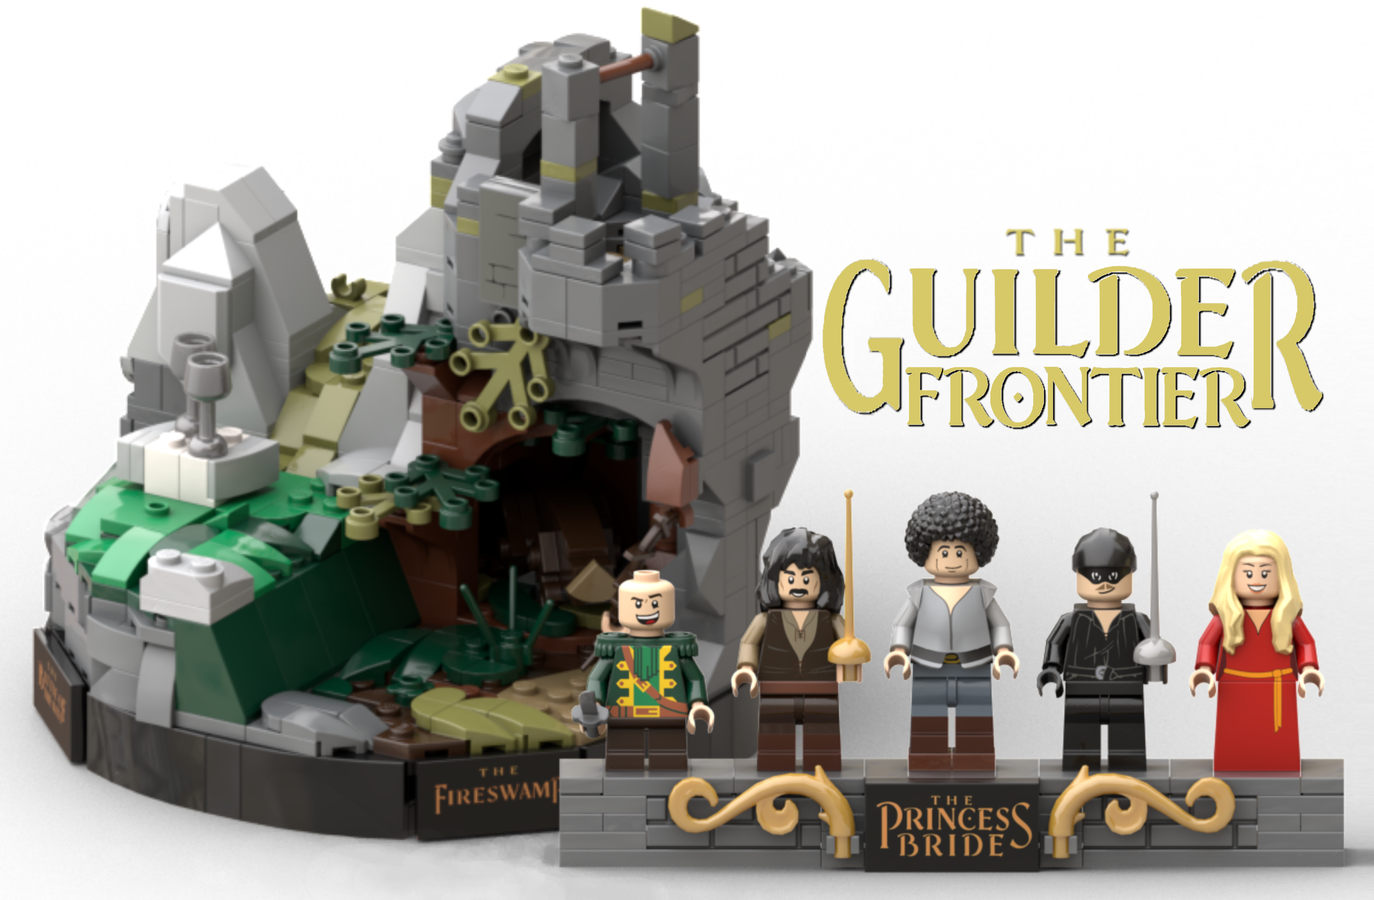 LEGO Ideas The Princess Bride: The Guilder Frontier